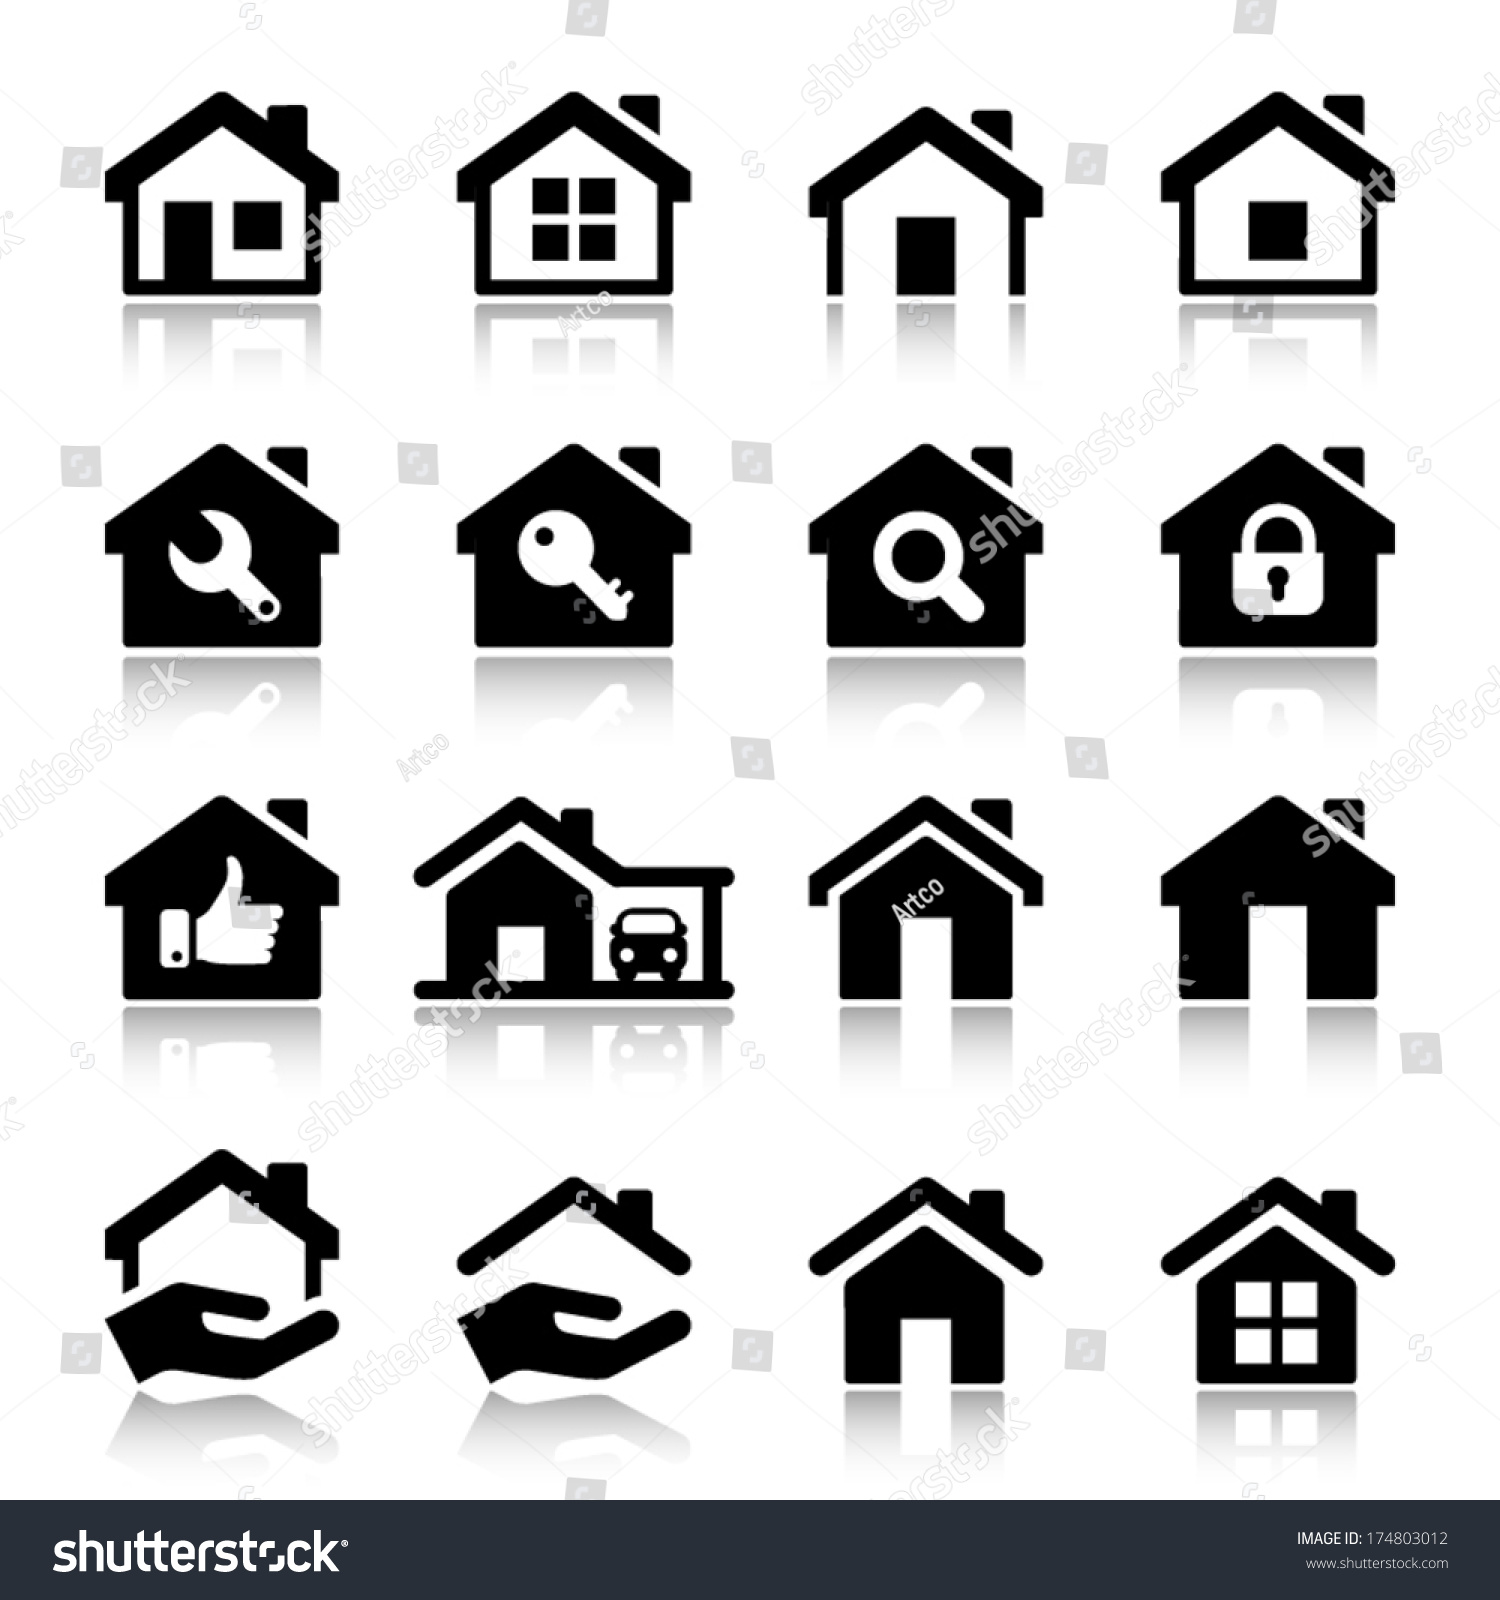 SVG of house icon set, black color, for business svg